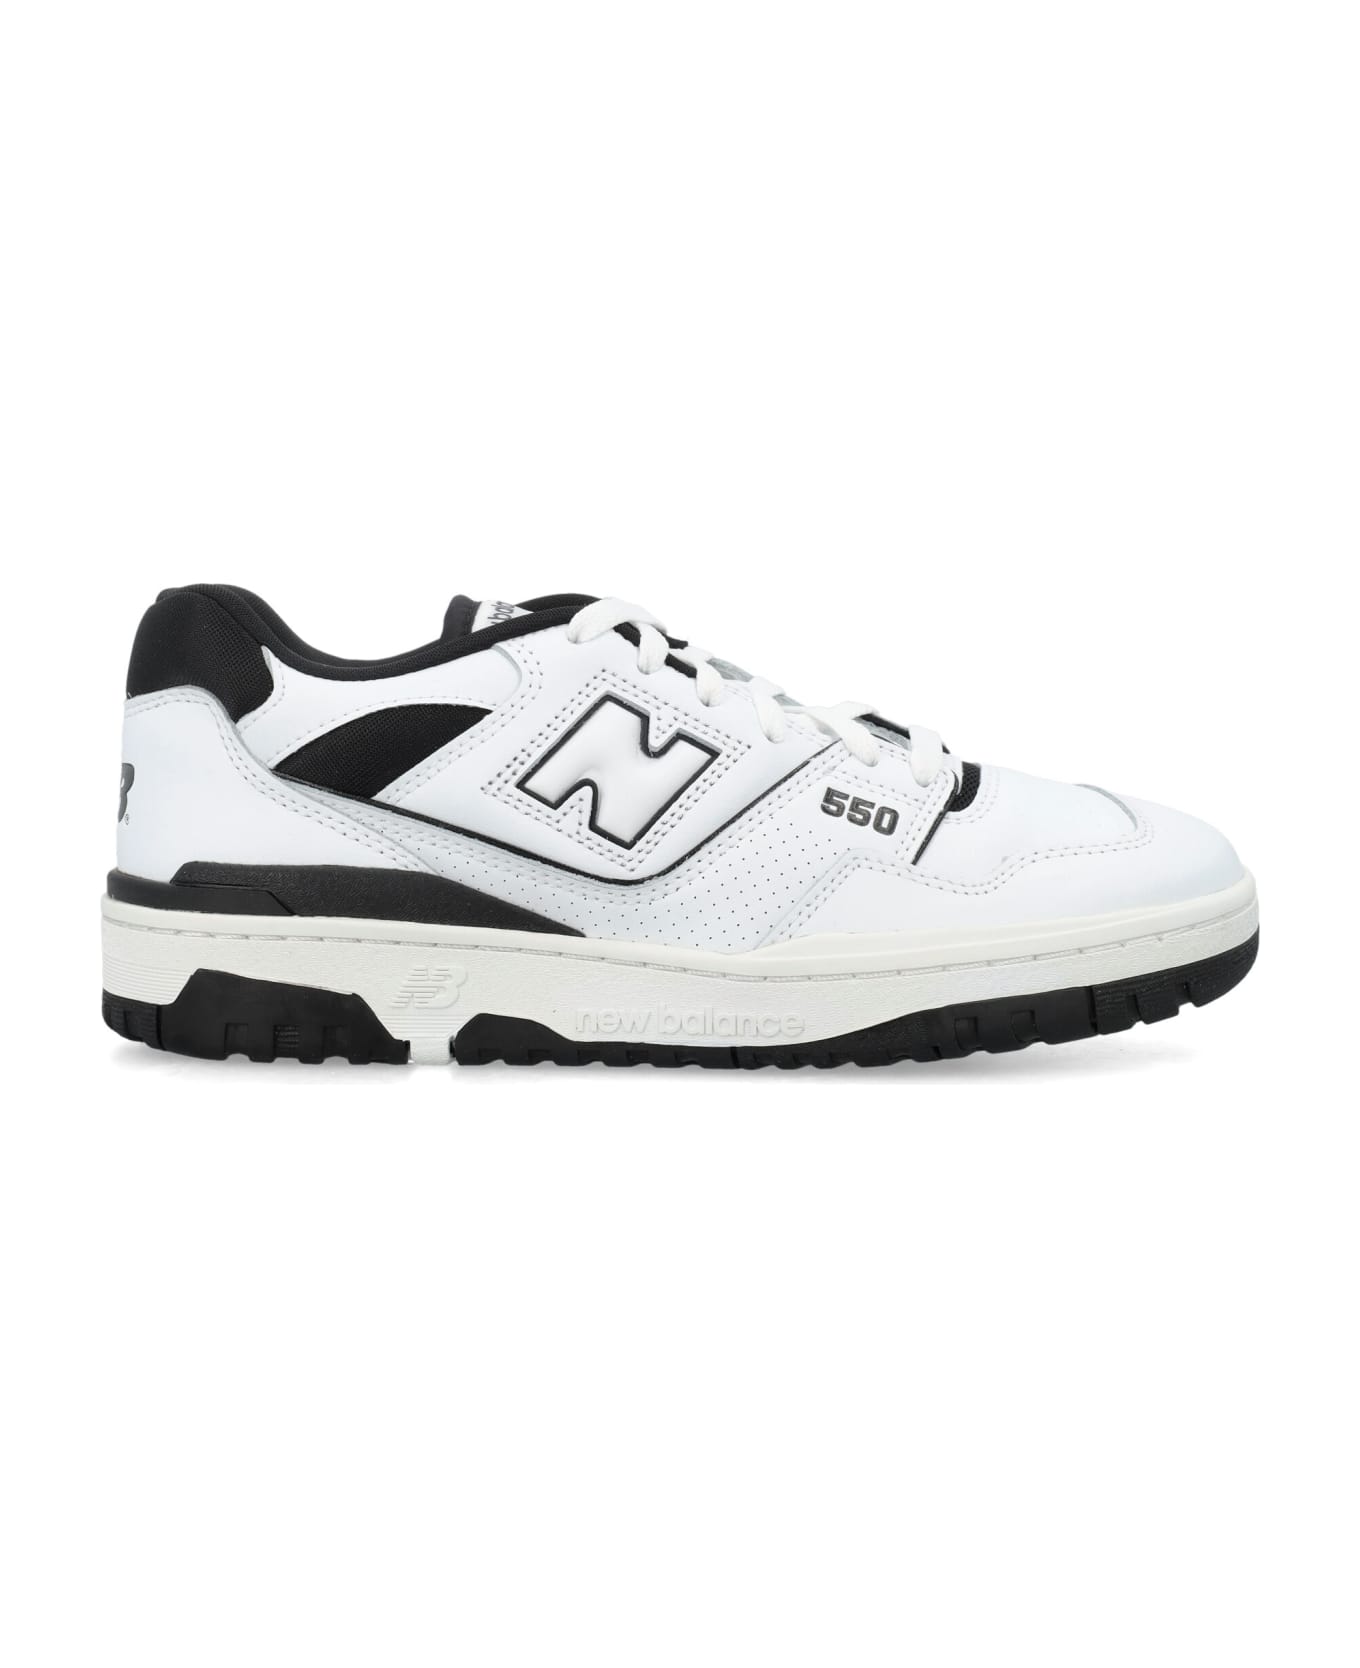 New Balance Bb550 Sneakers - WHITE BLACK